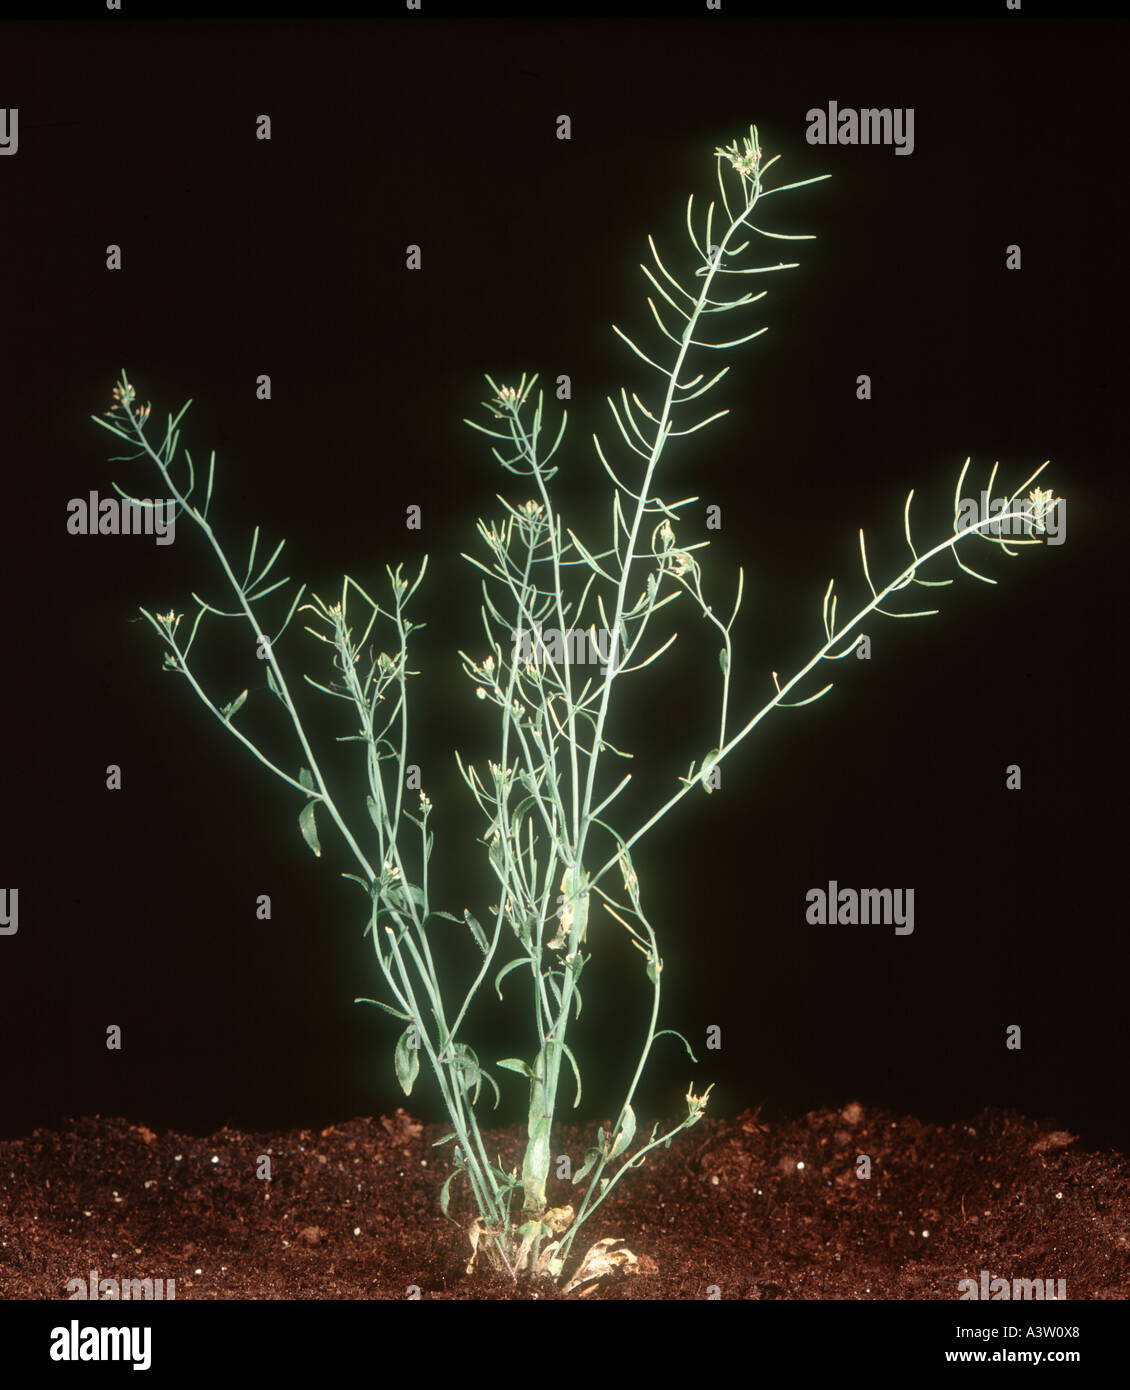 Thale cress Arabidopsis thaliana flowering and seeding Stock Photo